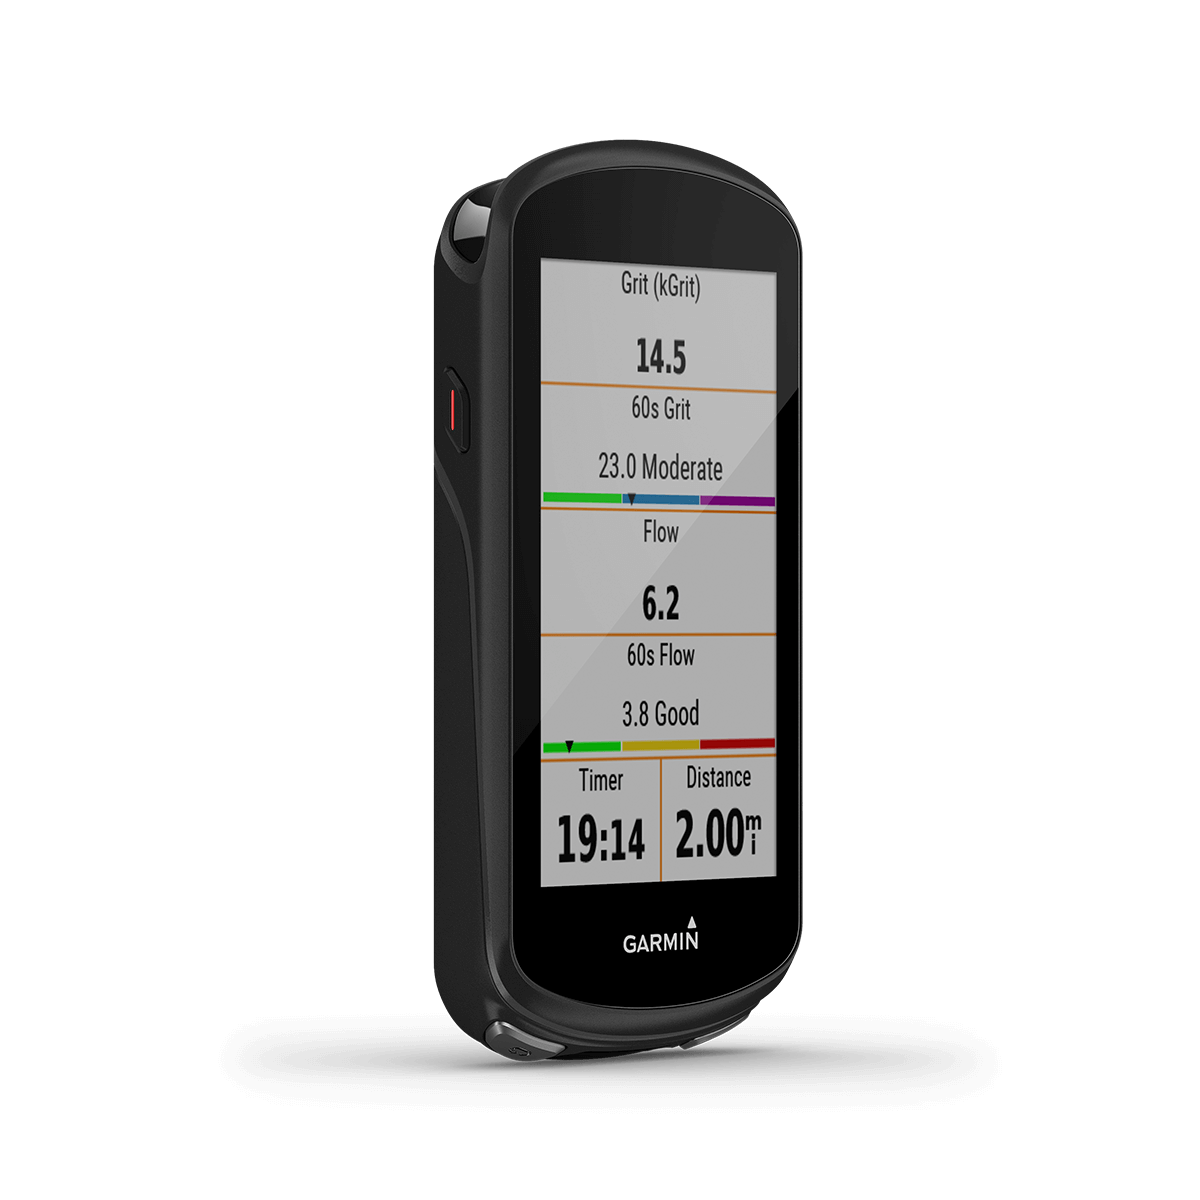 Garmin Edge 1030/1030+ - Ride With GPS HelpRide With GPS Help